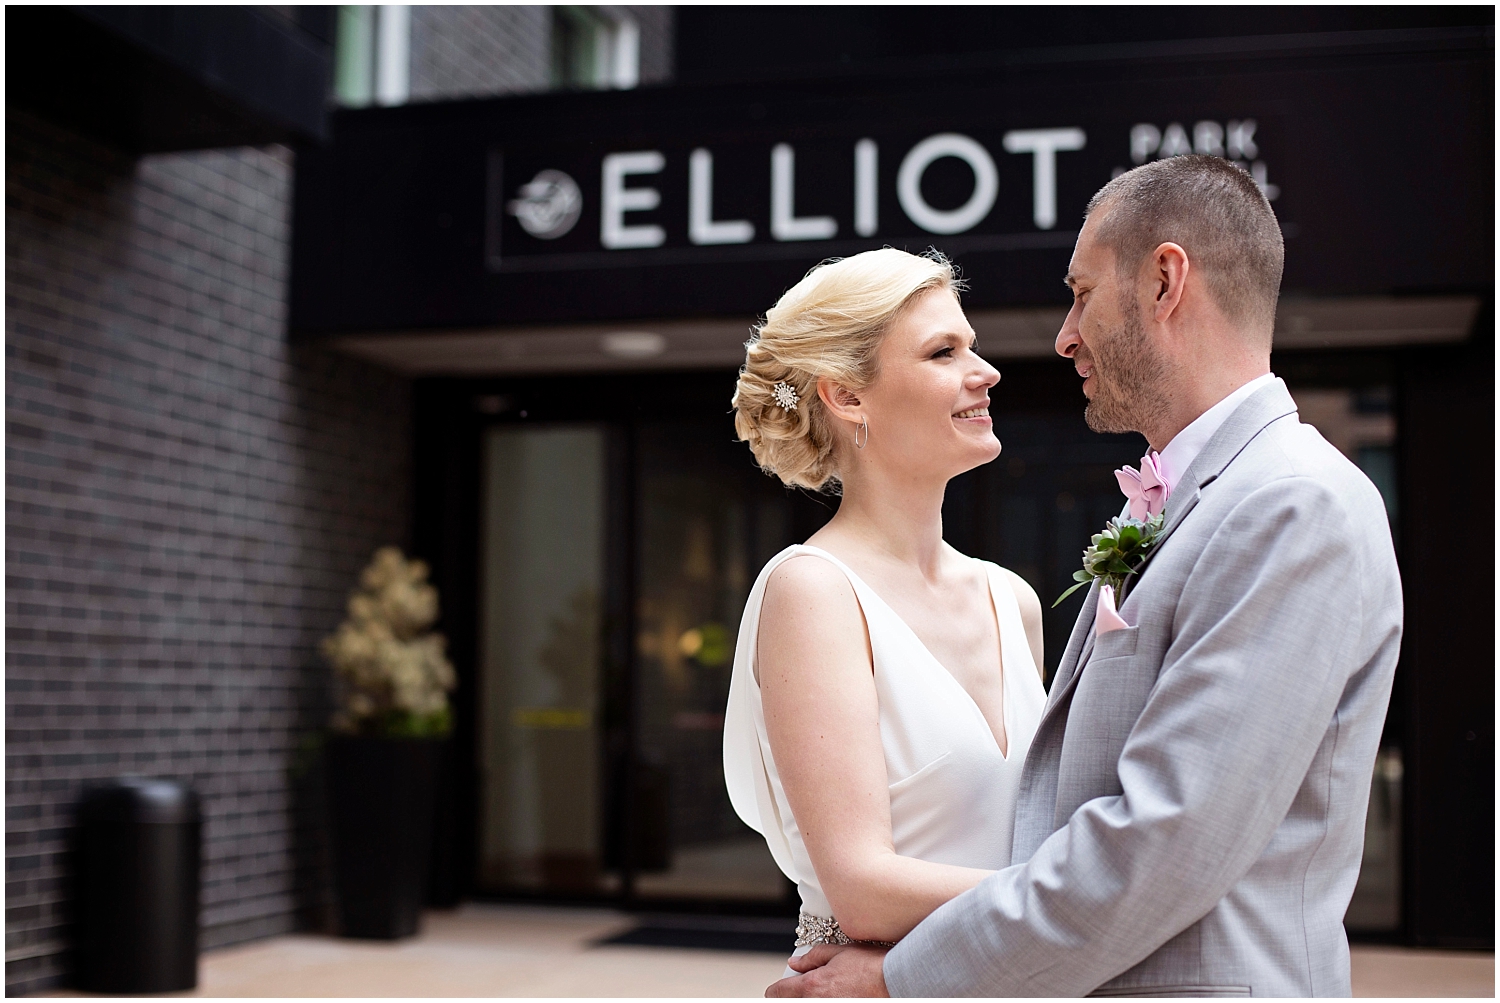 The Elliot Park Hotel - Rosetree Wedding Events_0101.jpg